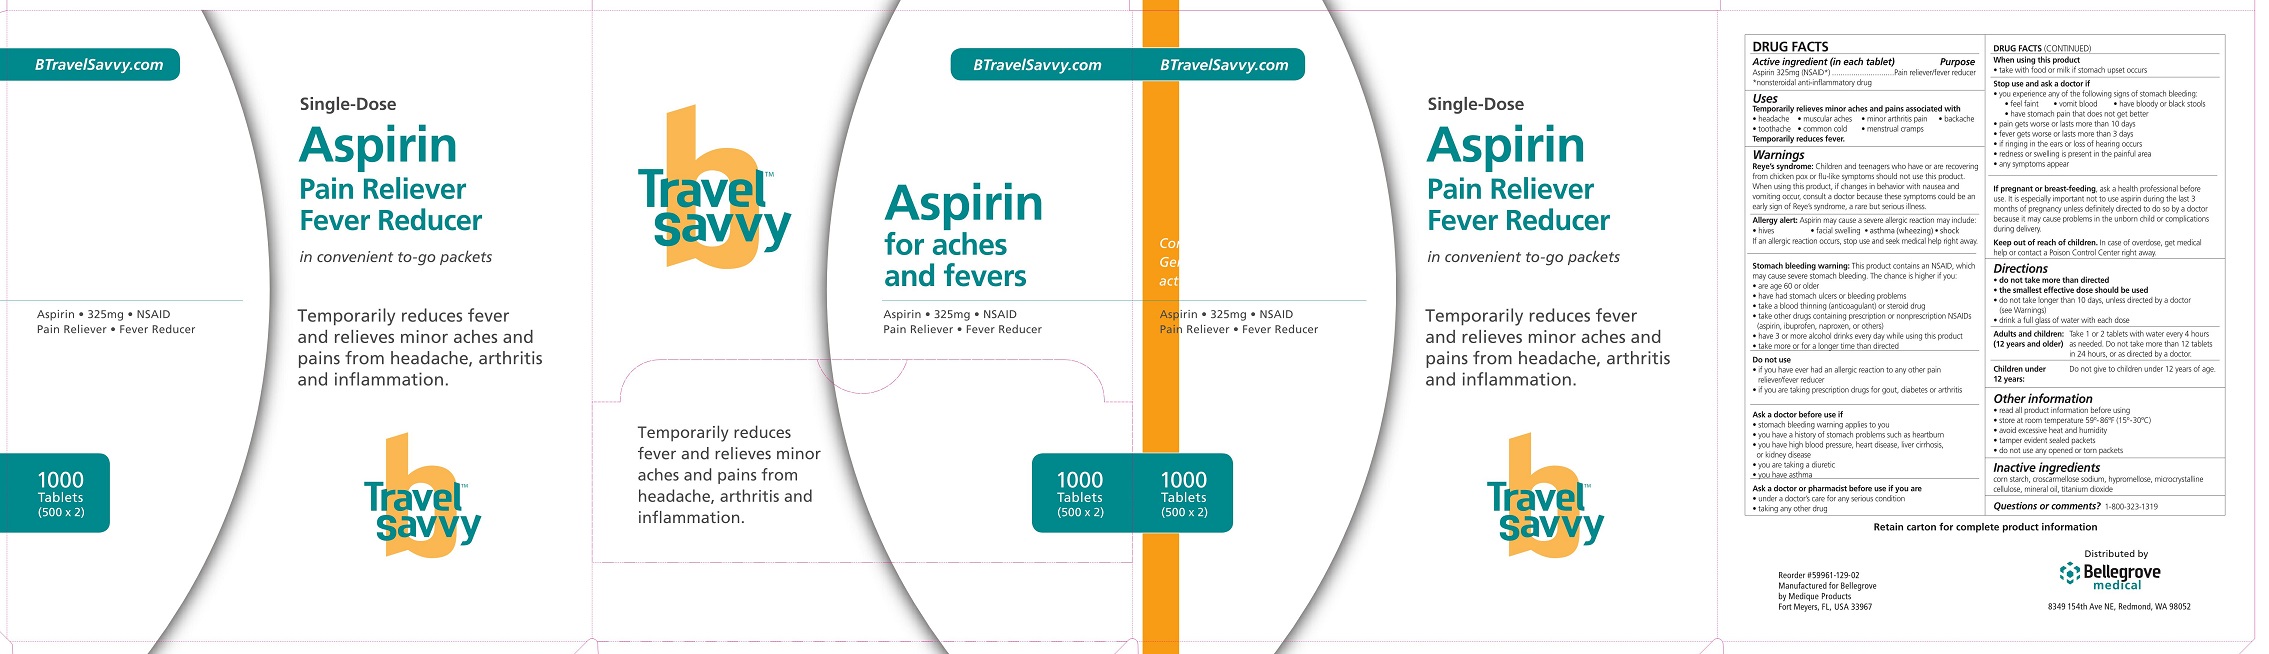 Bellegrove Aspirin Label